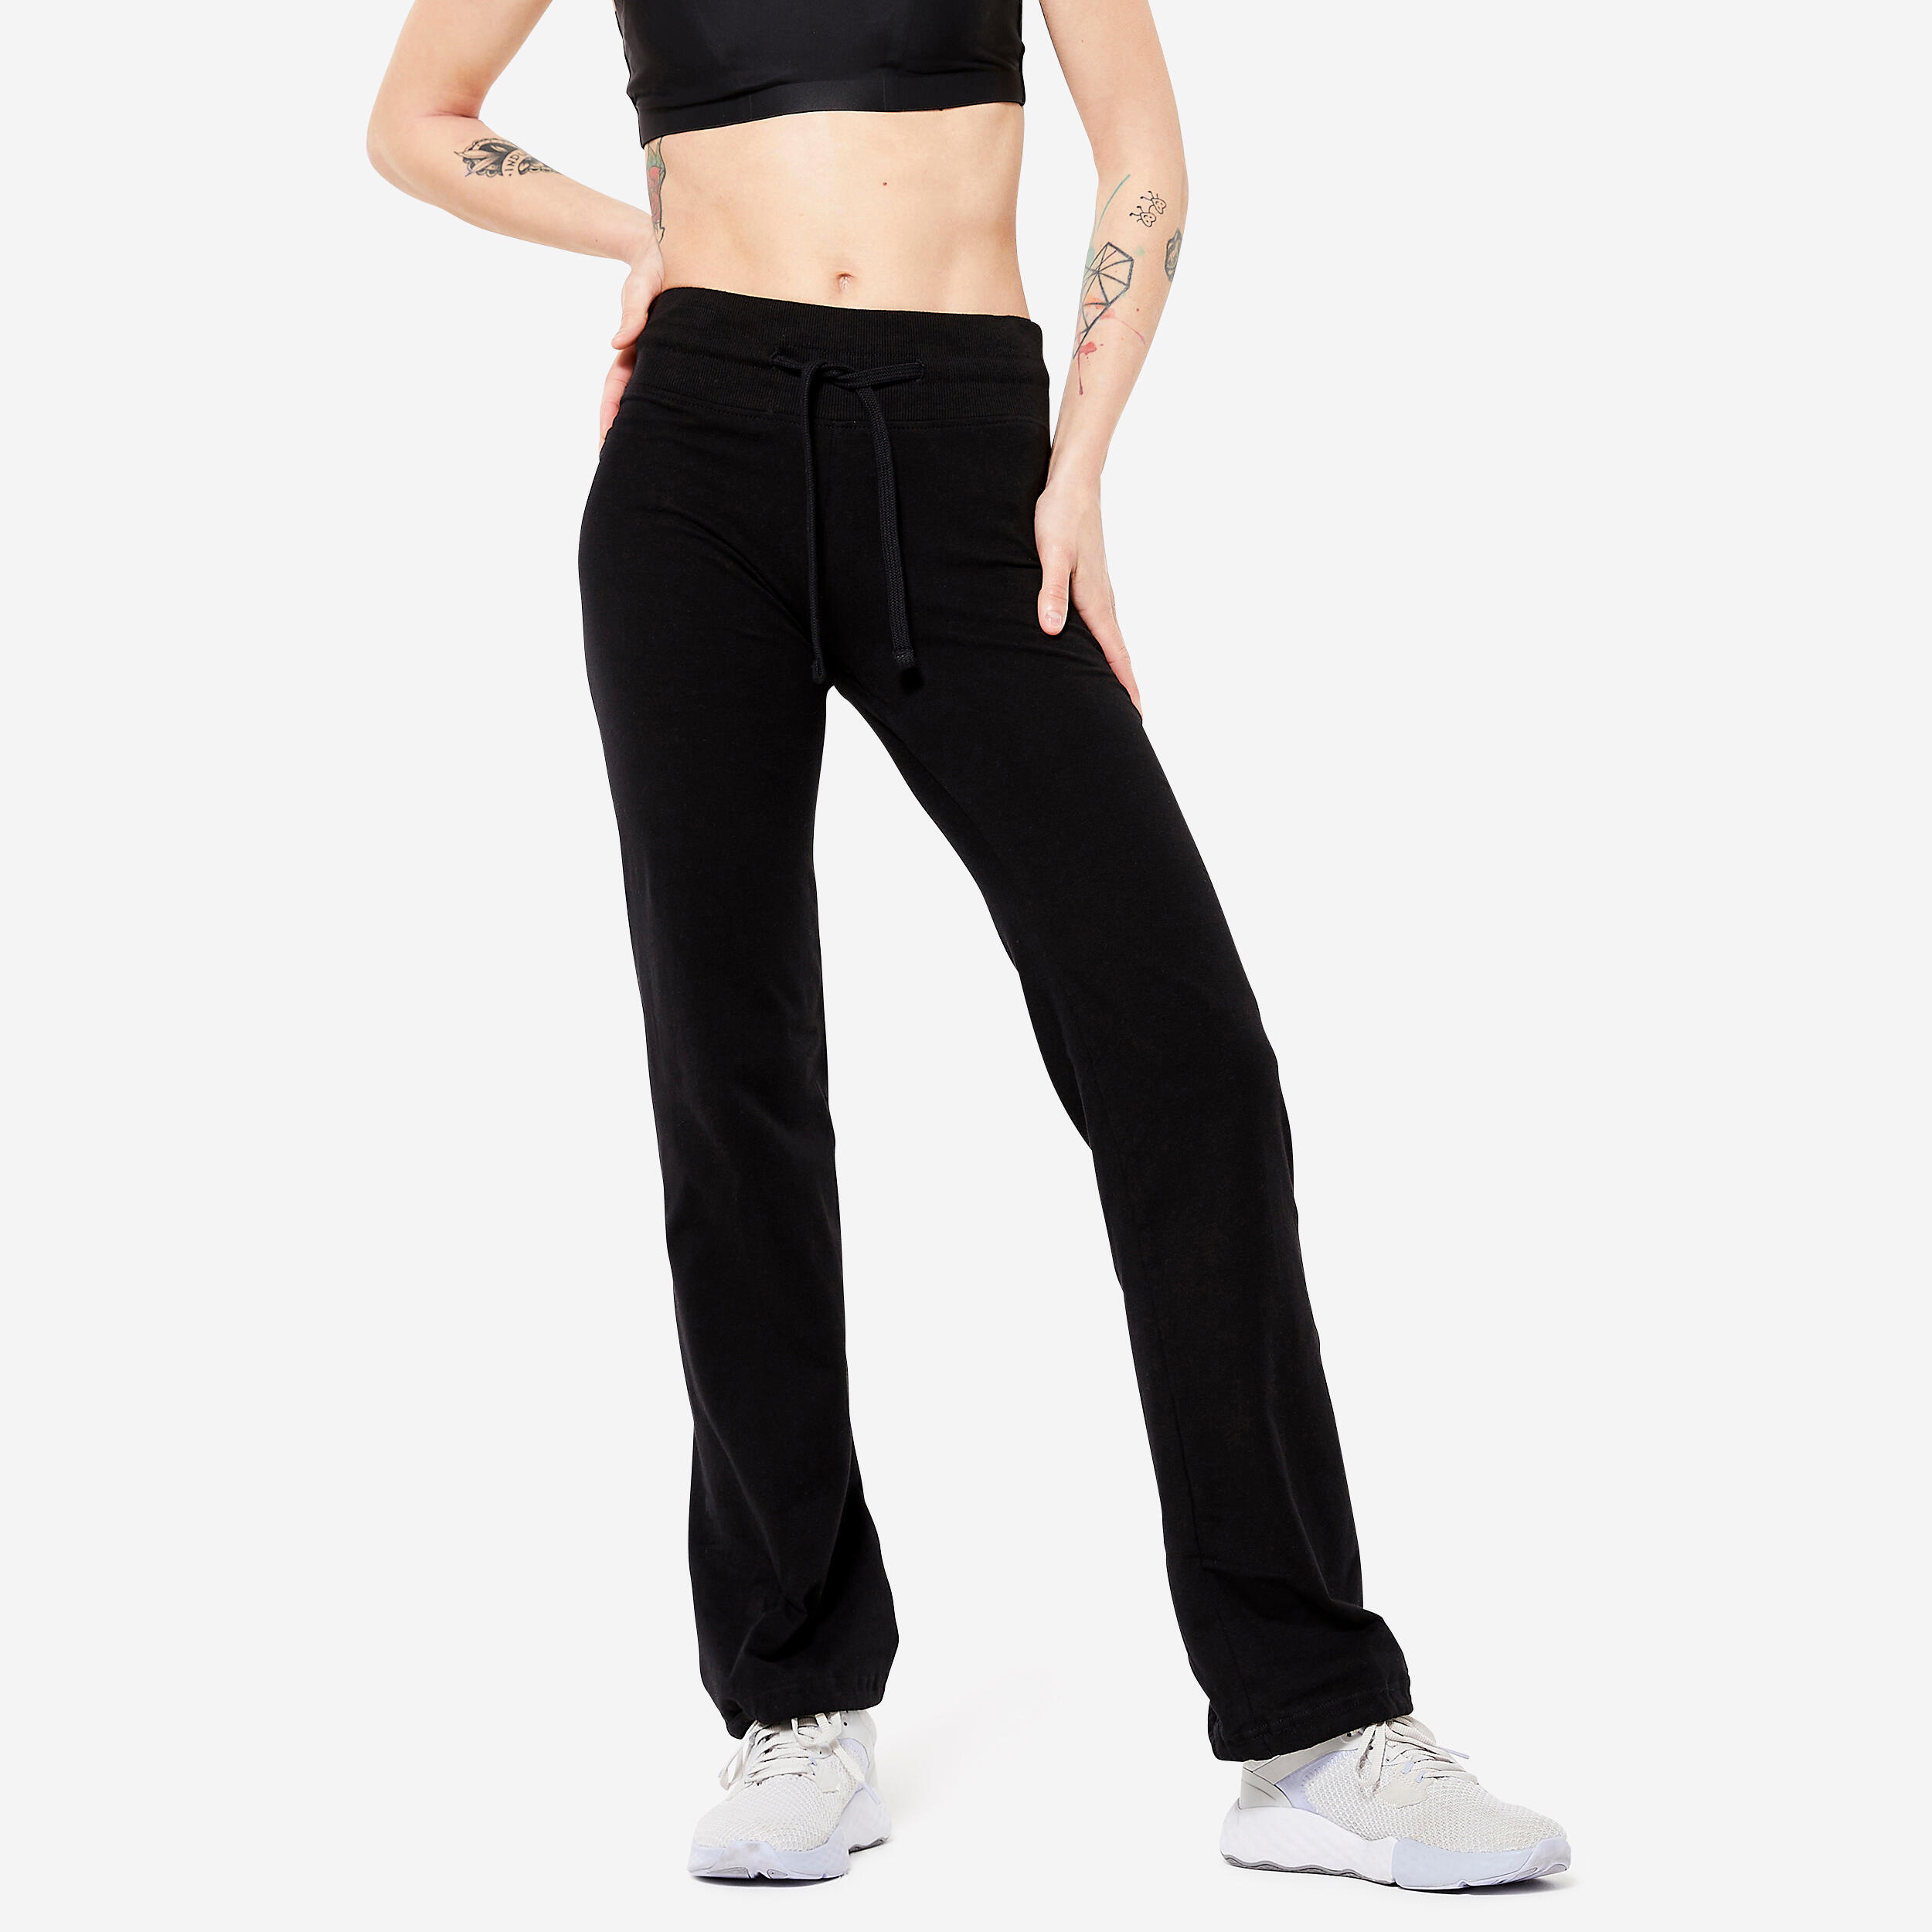 Decathlon : Women's fitness cardio regular stretch leggings fti 100 (black)  - domyos